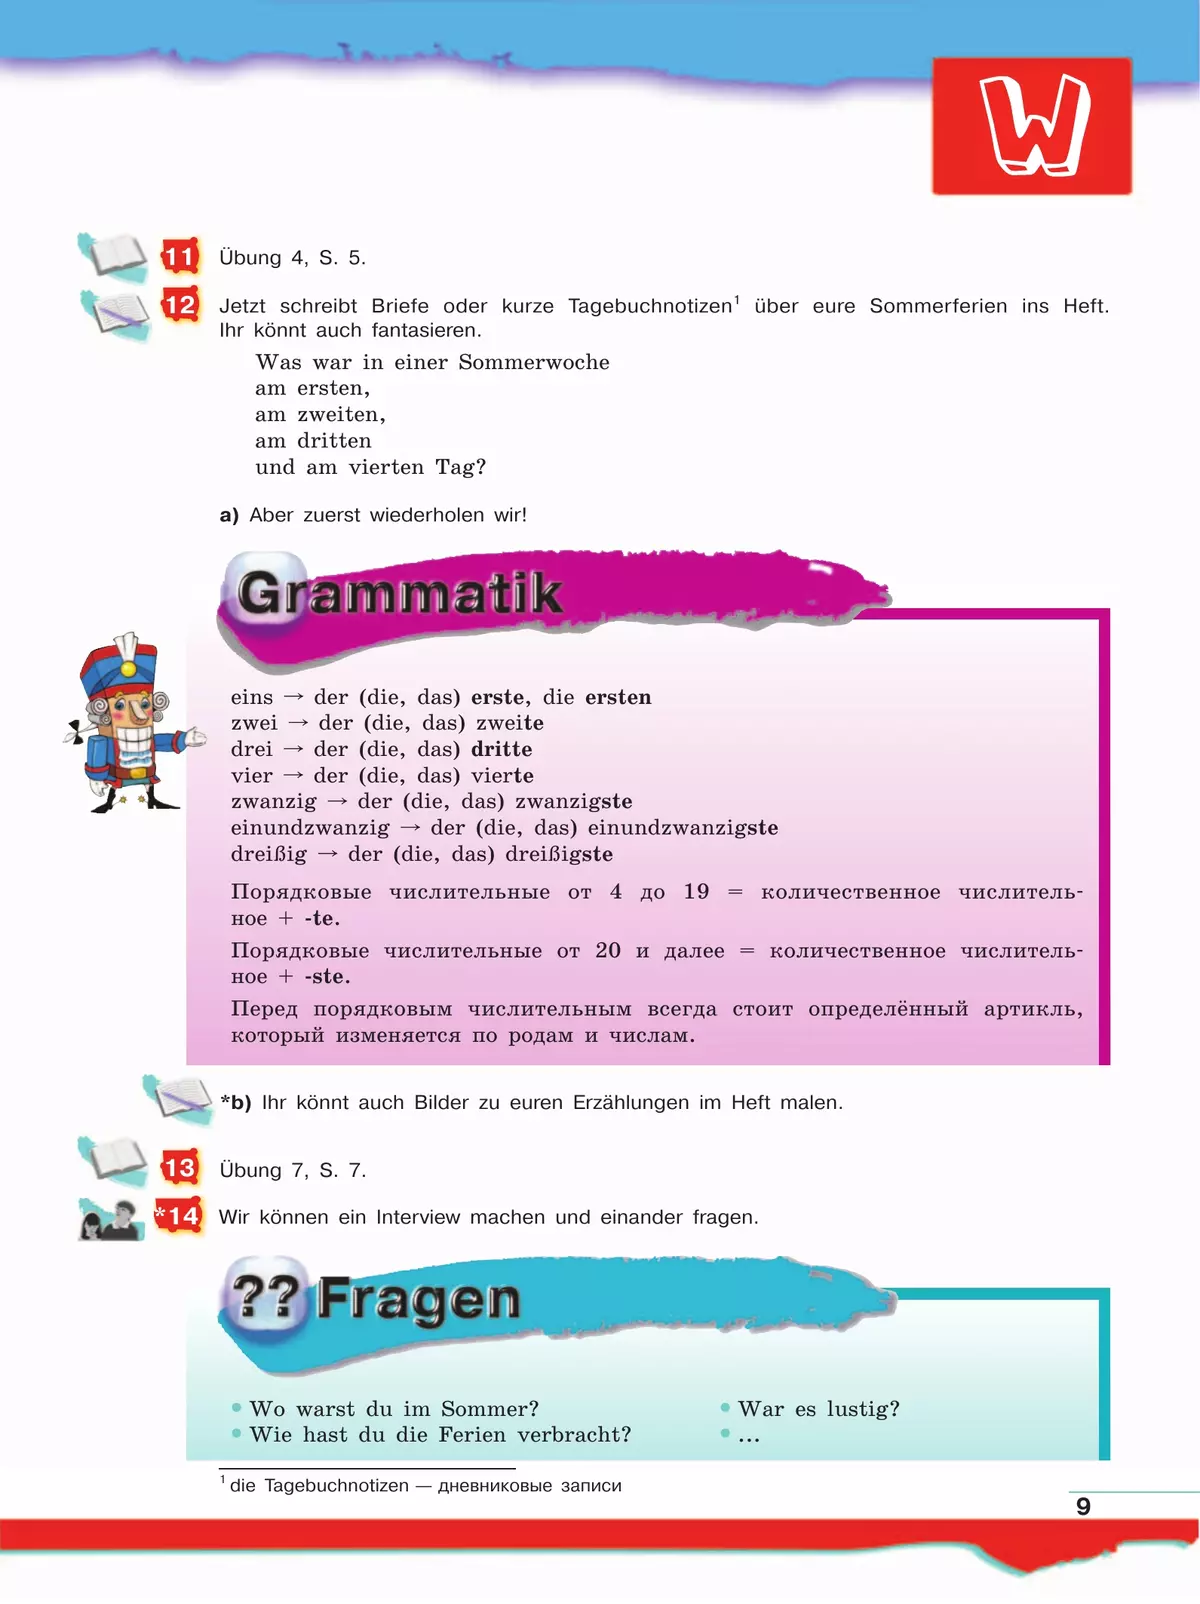 Немецкий язык. 7 класс. 7